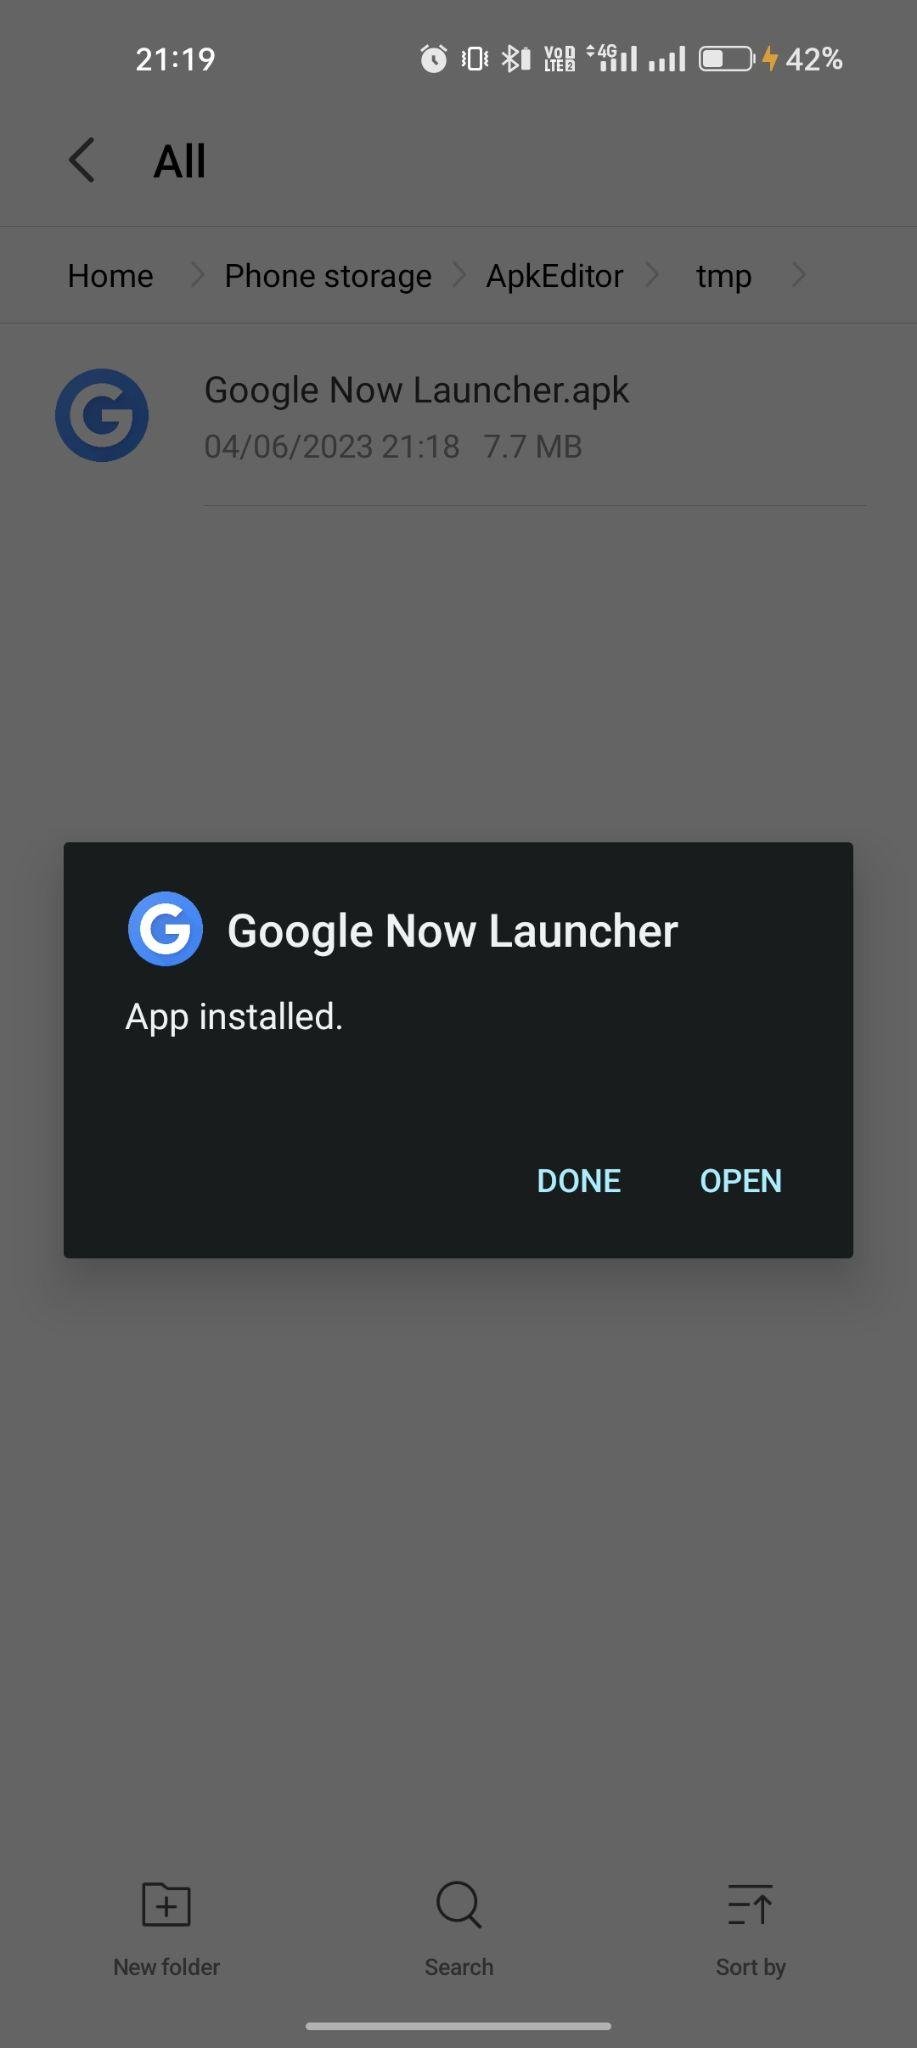 Google Now Launcher apk installed